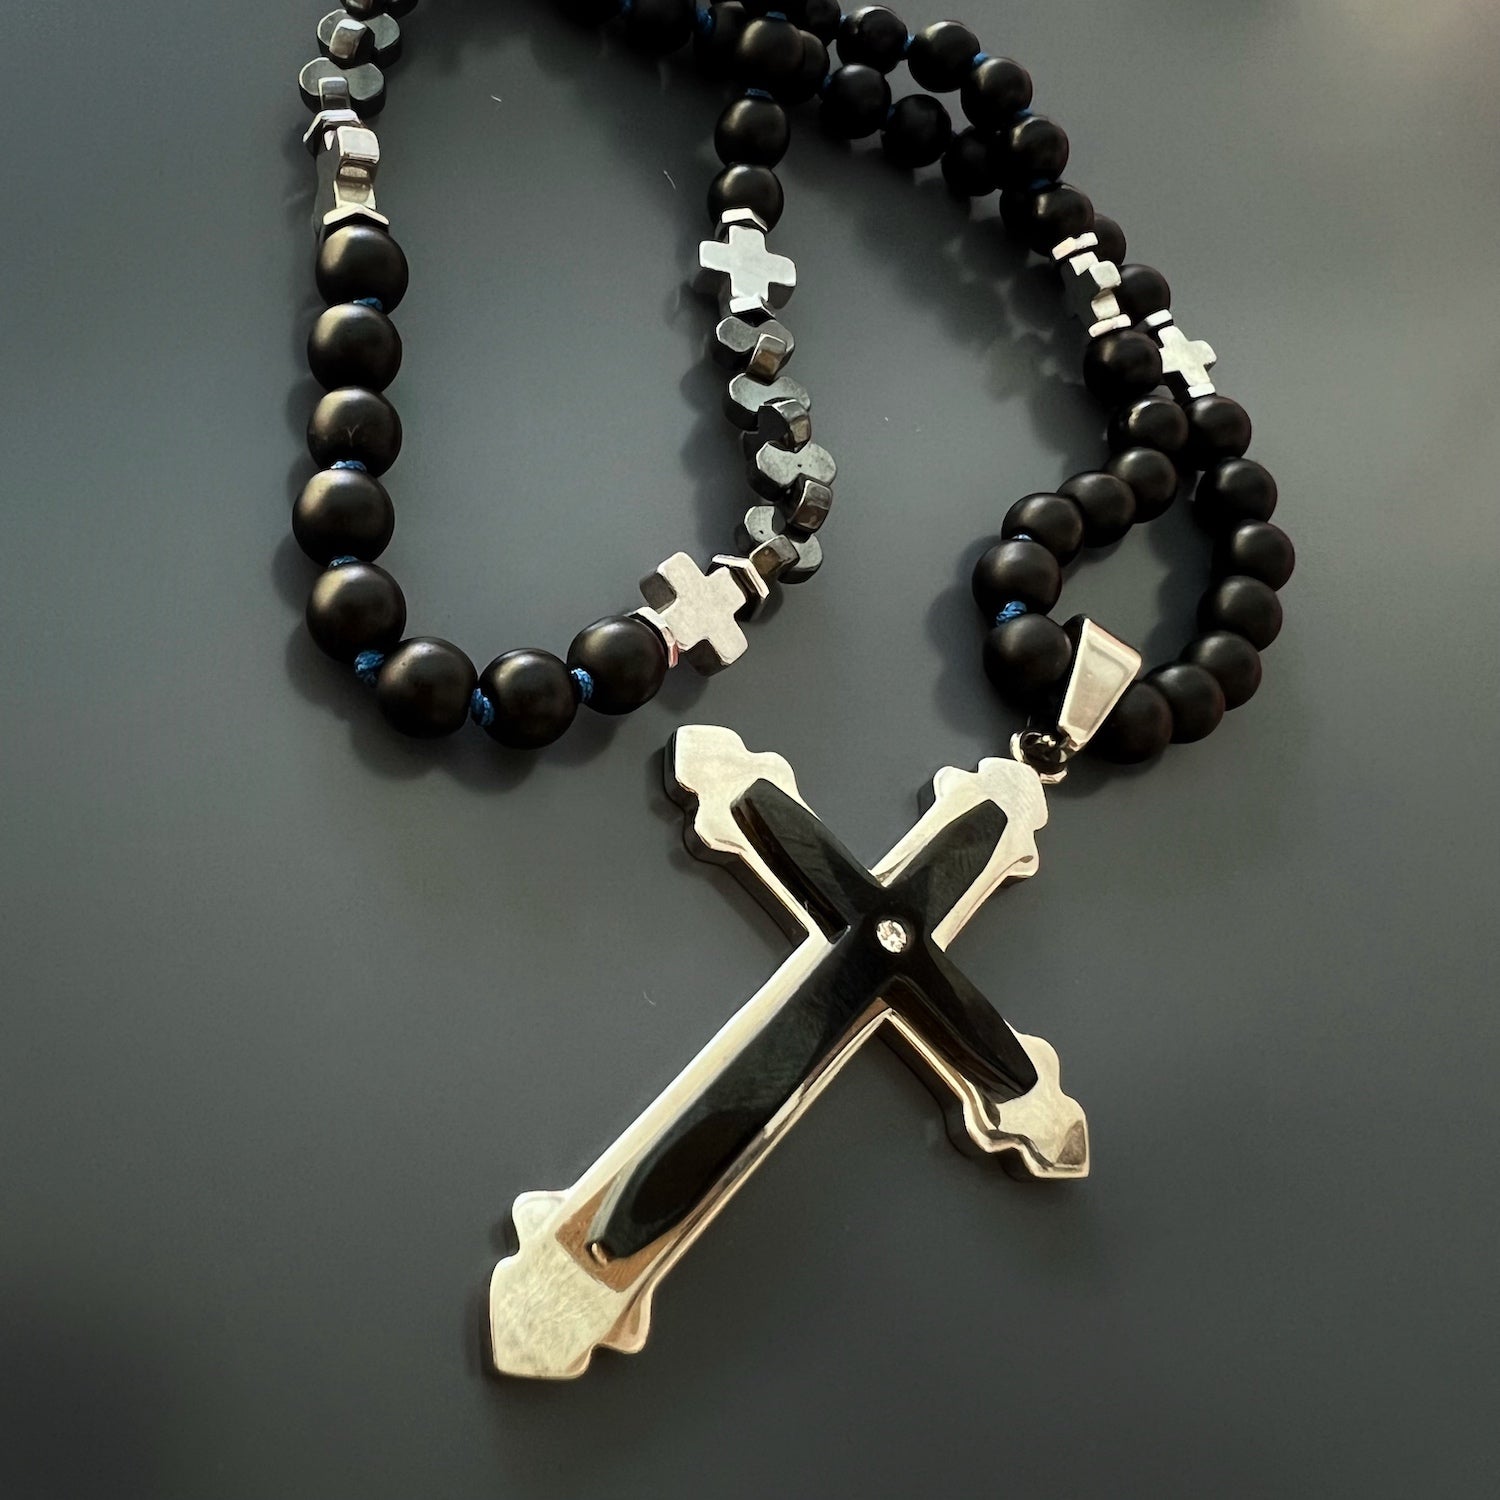 Black Onyx Cross Necklace on black background